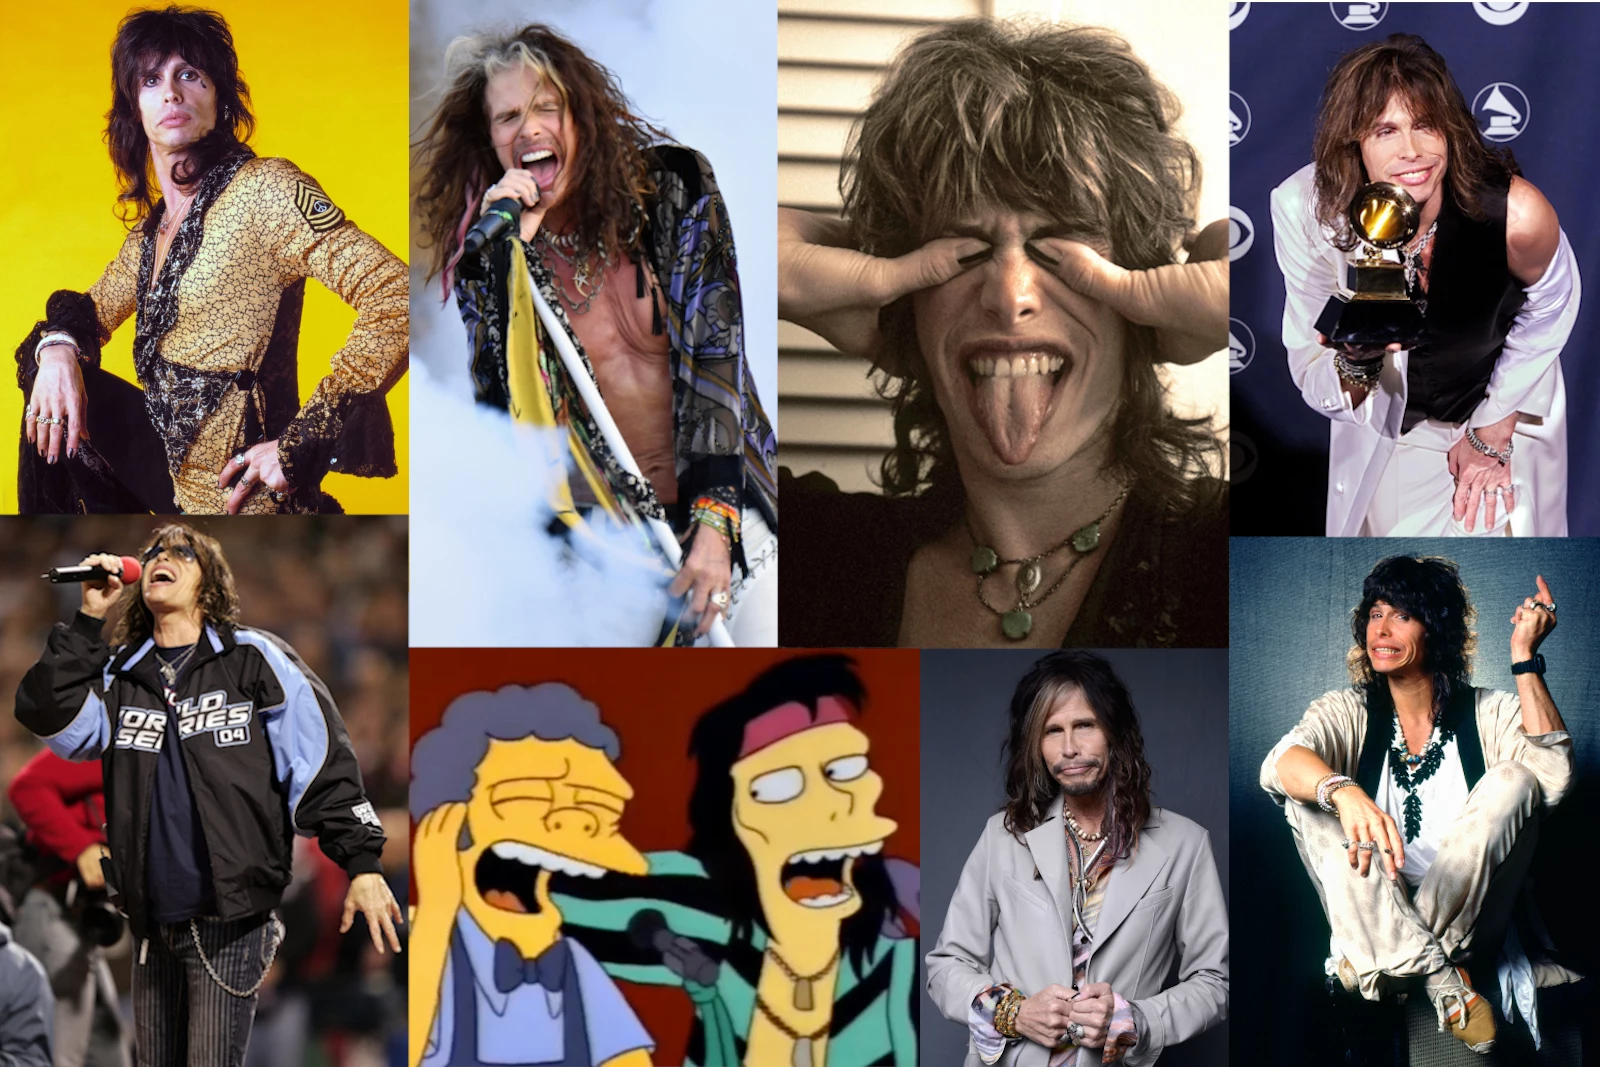 Aerosmith through the years